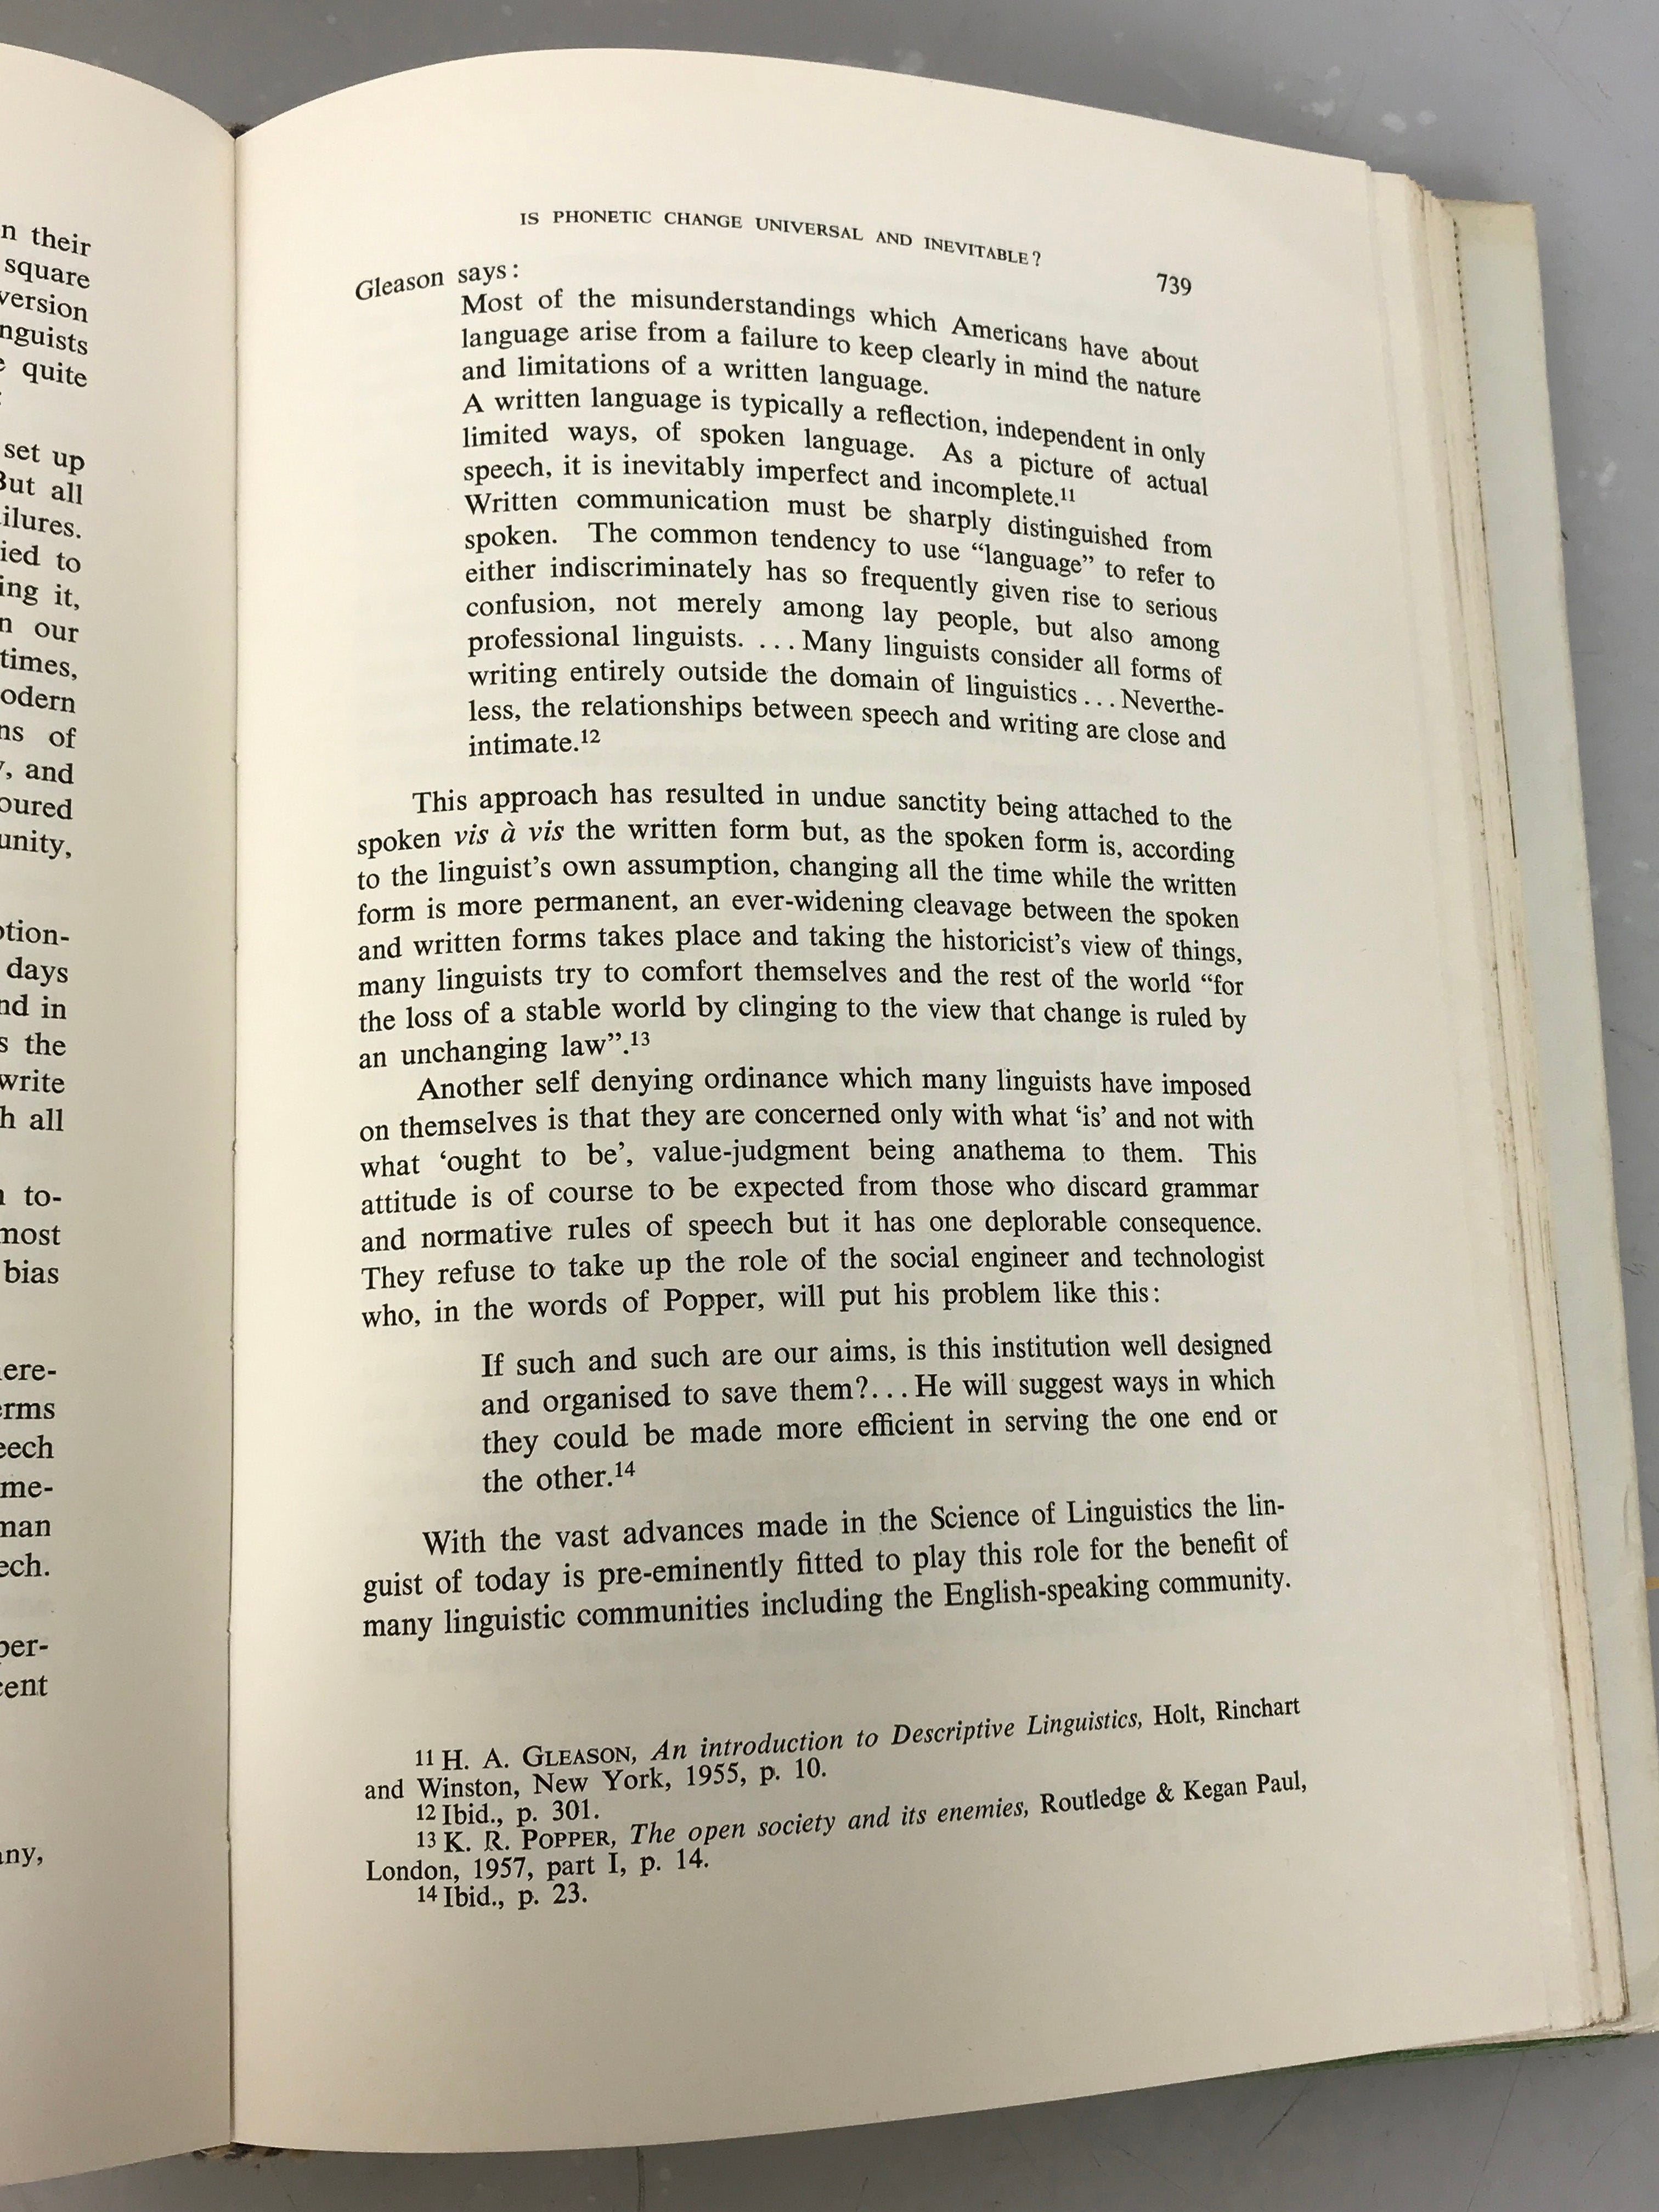 Proceedings of the First International Conference Seminar of Tamil Studies (2 Vols) 1968-1969 HC DJ